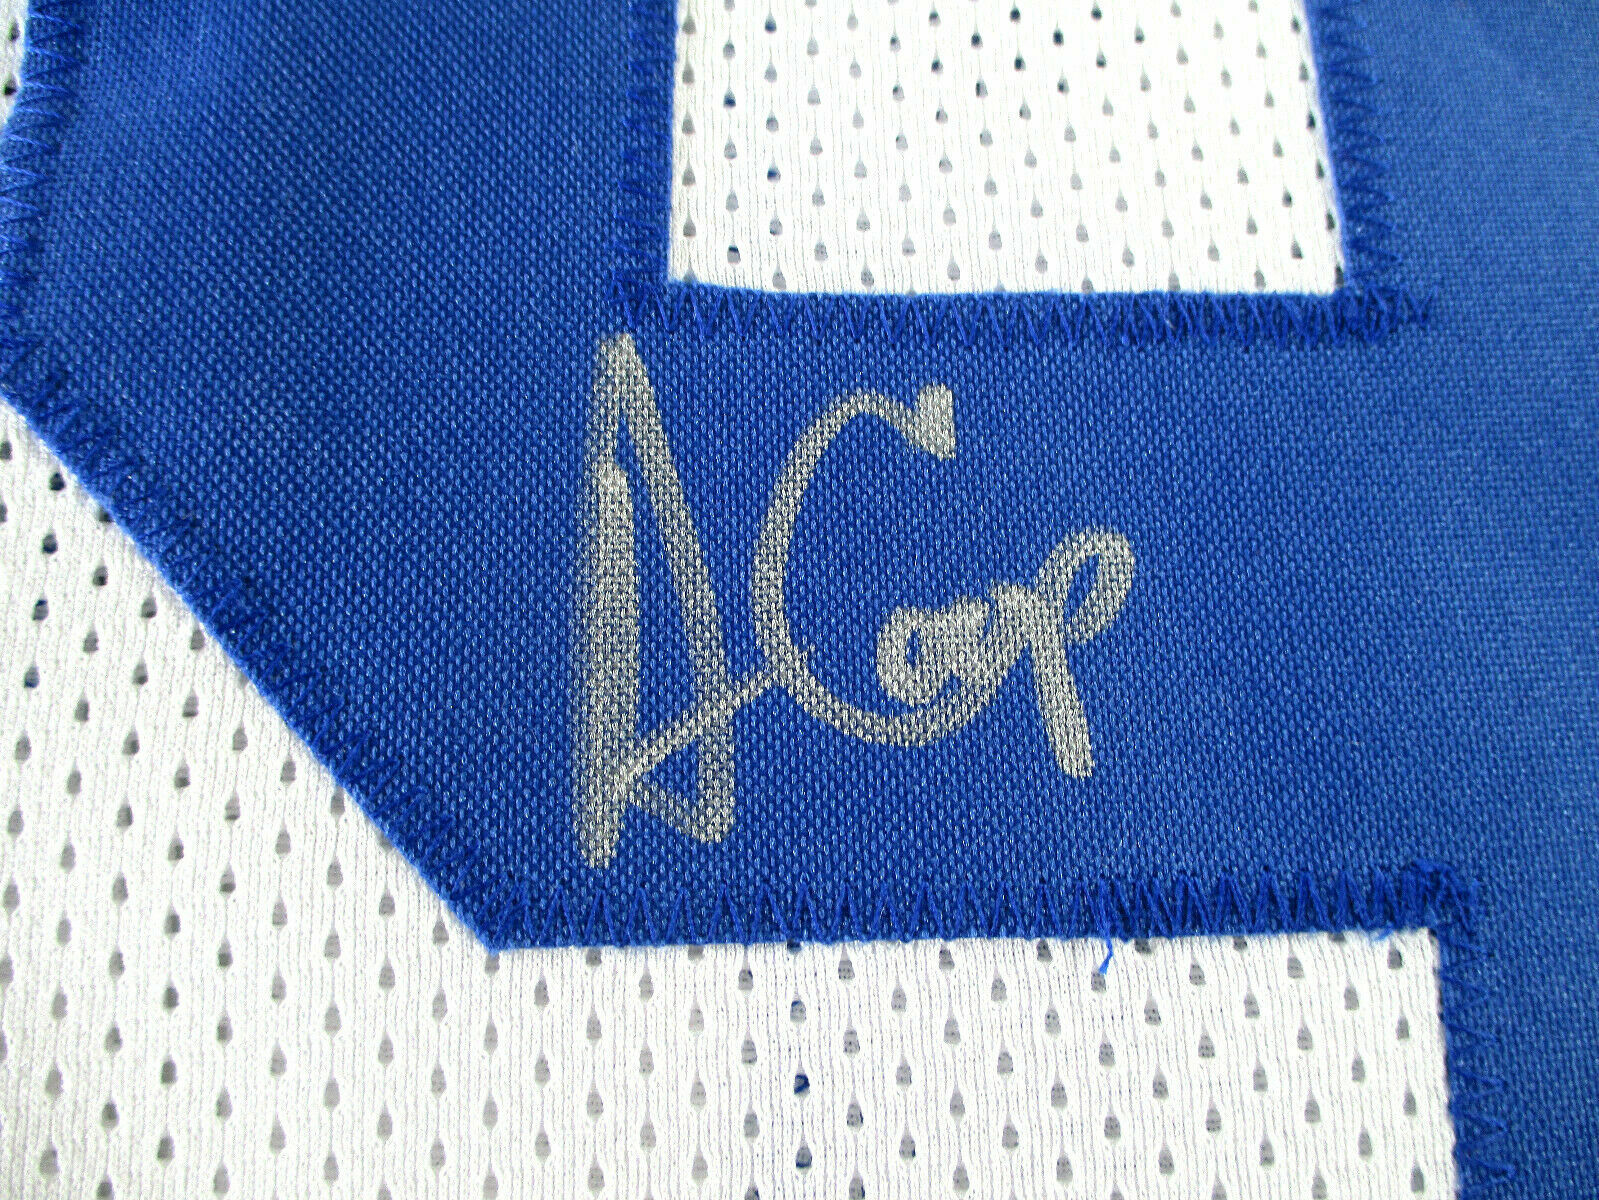 Amari Cooper / Autographed Dallas Cowboys White Custom Football Jersey / COA